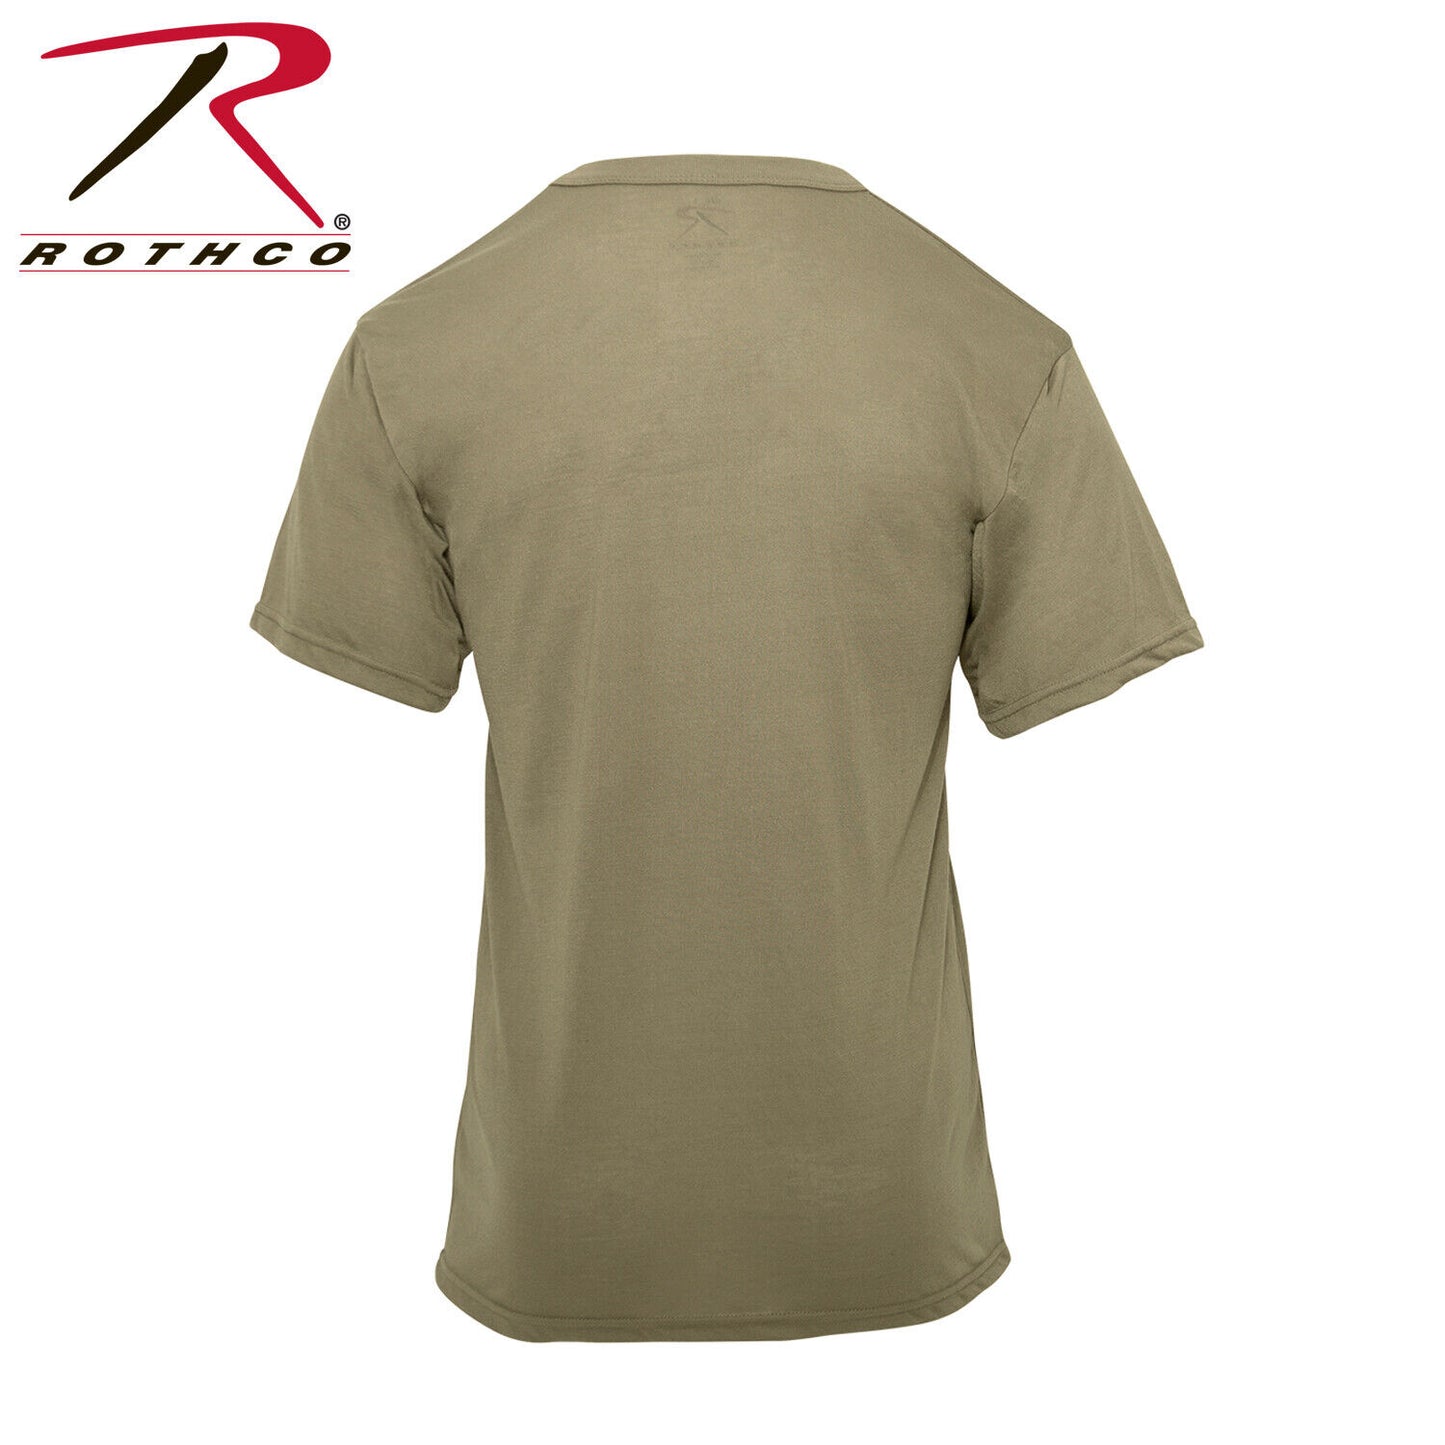 Men's AR 670-1 Coyote Brown Moisture Wicking T-Shirt